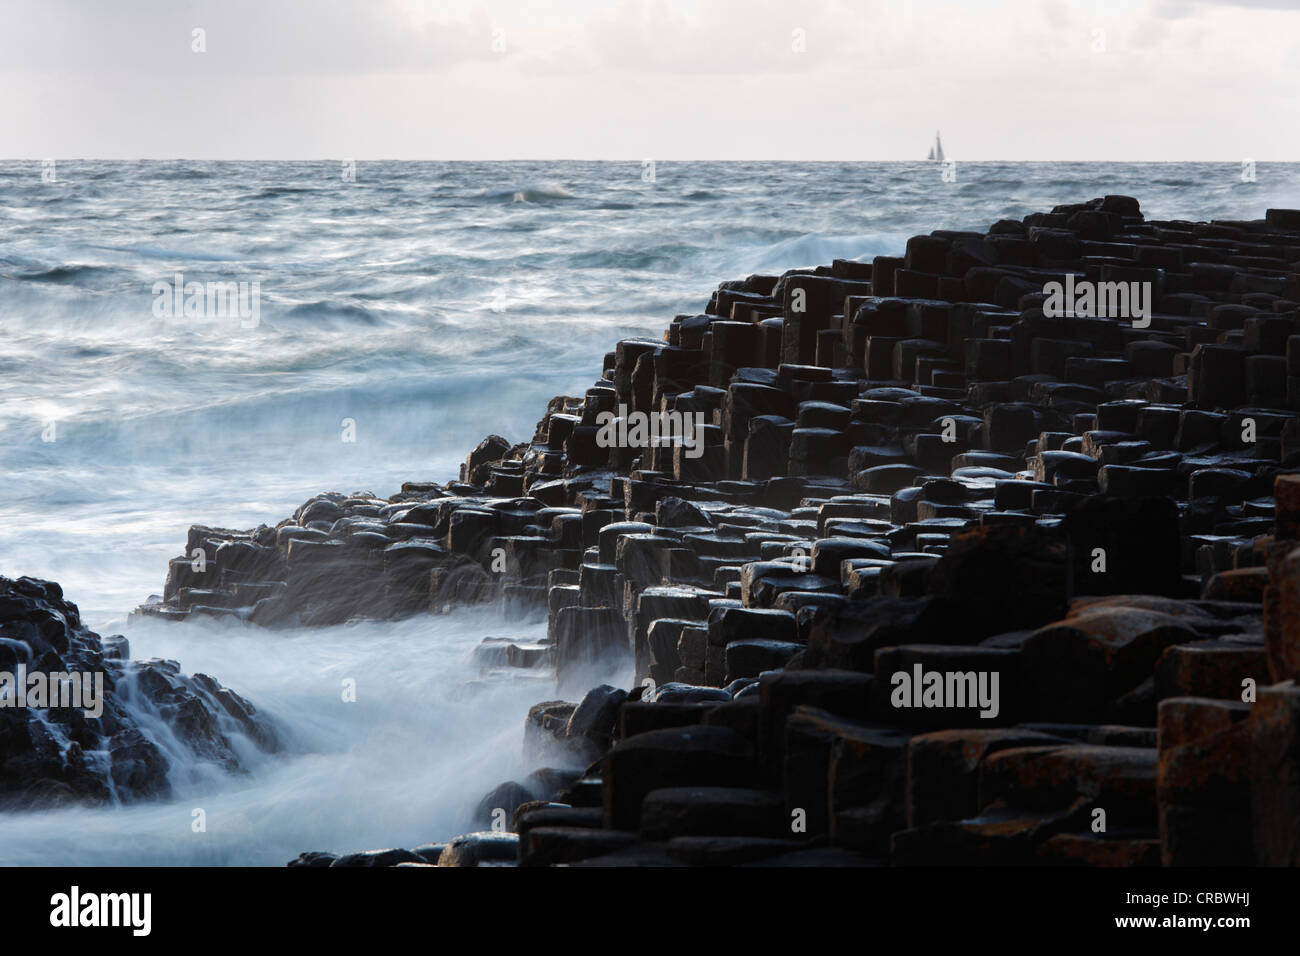 Giant's Causeway, Causeway Coast, County Antrim, Northern Ireland, United Kingdom, Europe Stock Photo